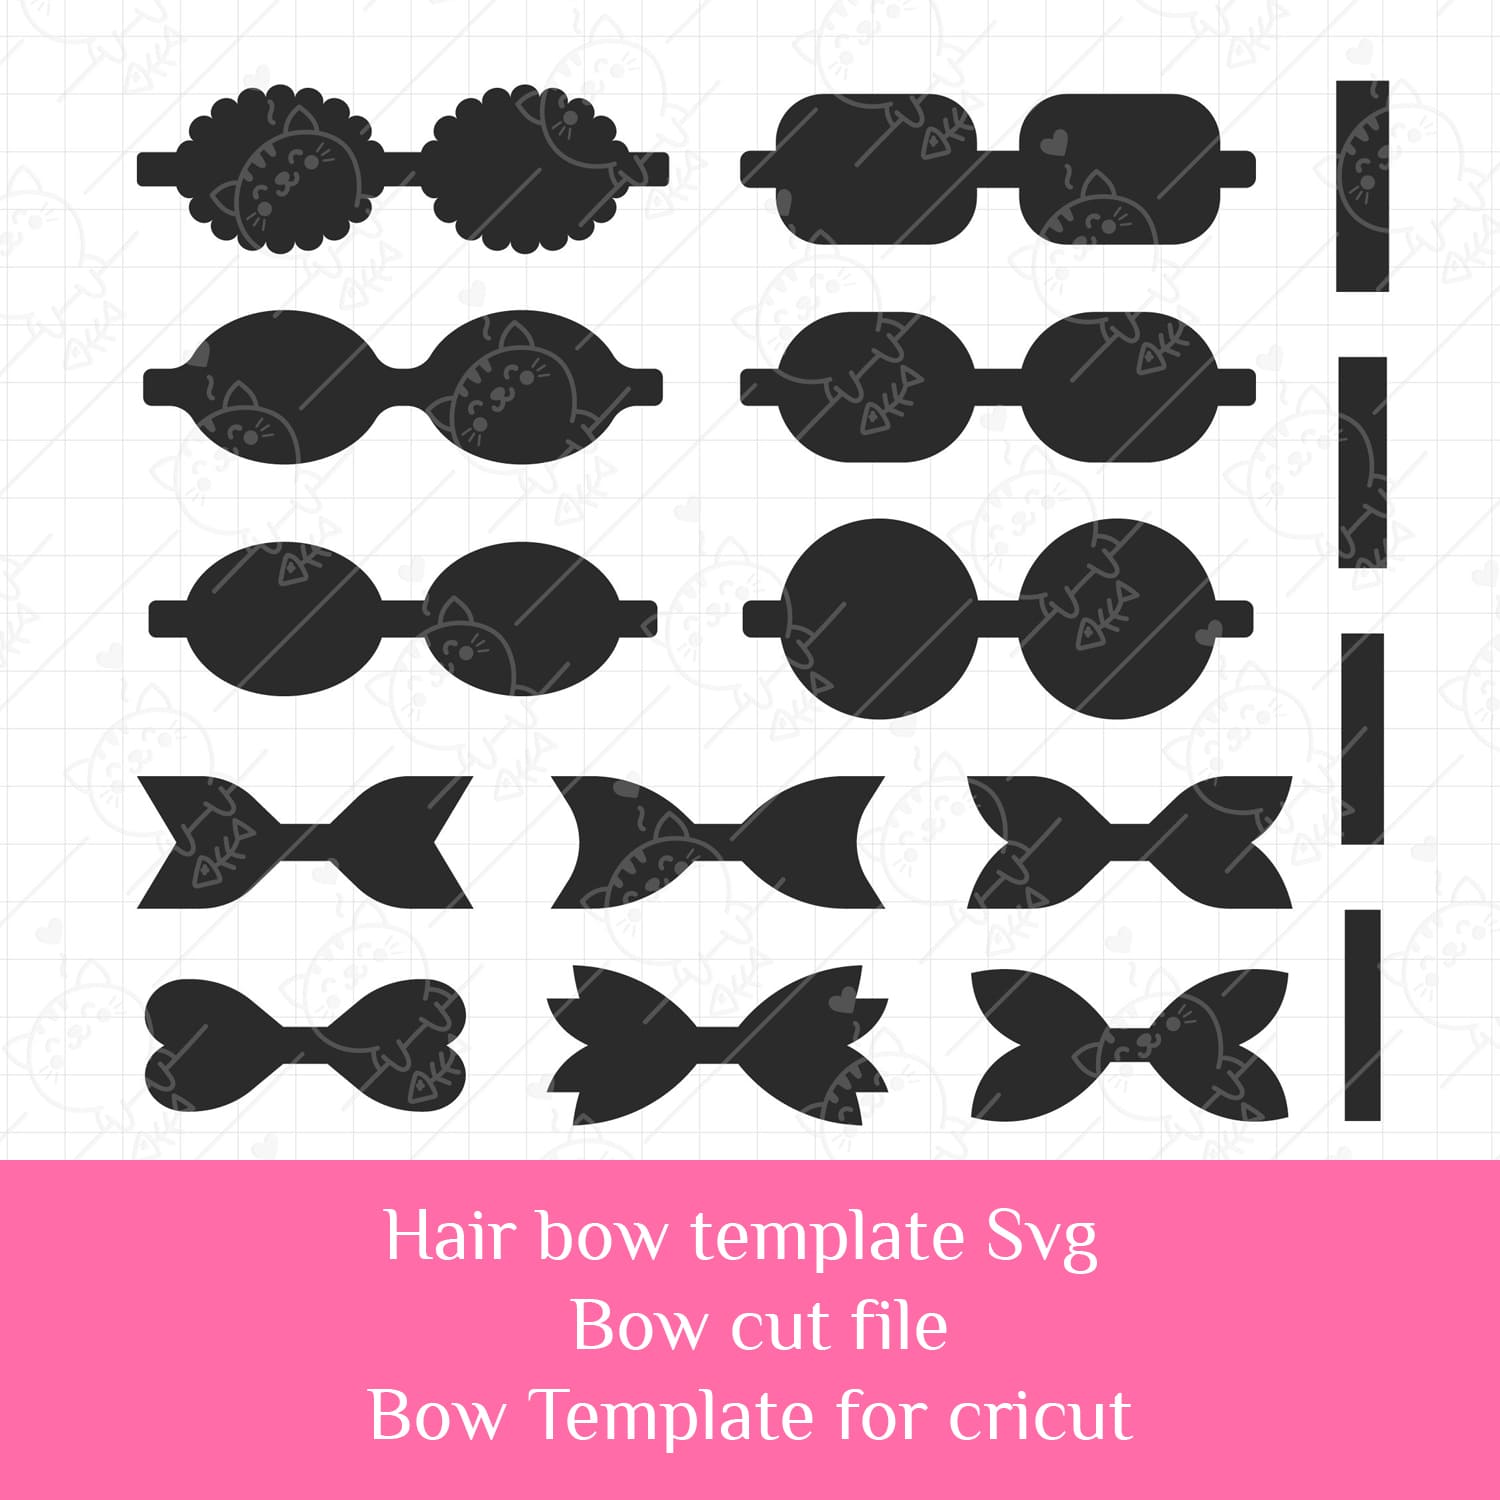 Hair bow template Svg | Bow cut file|Bow Template for cricut.